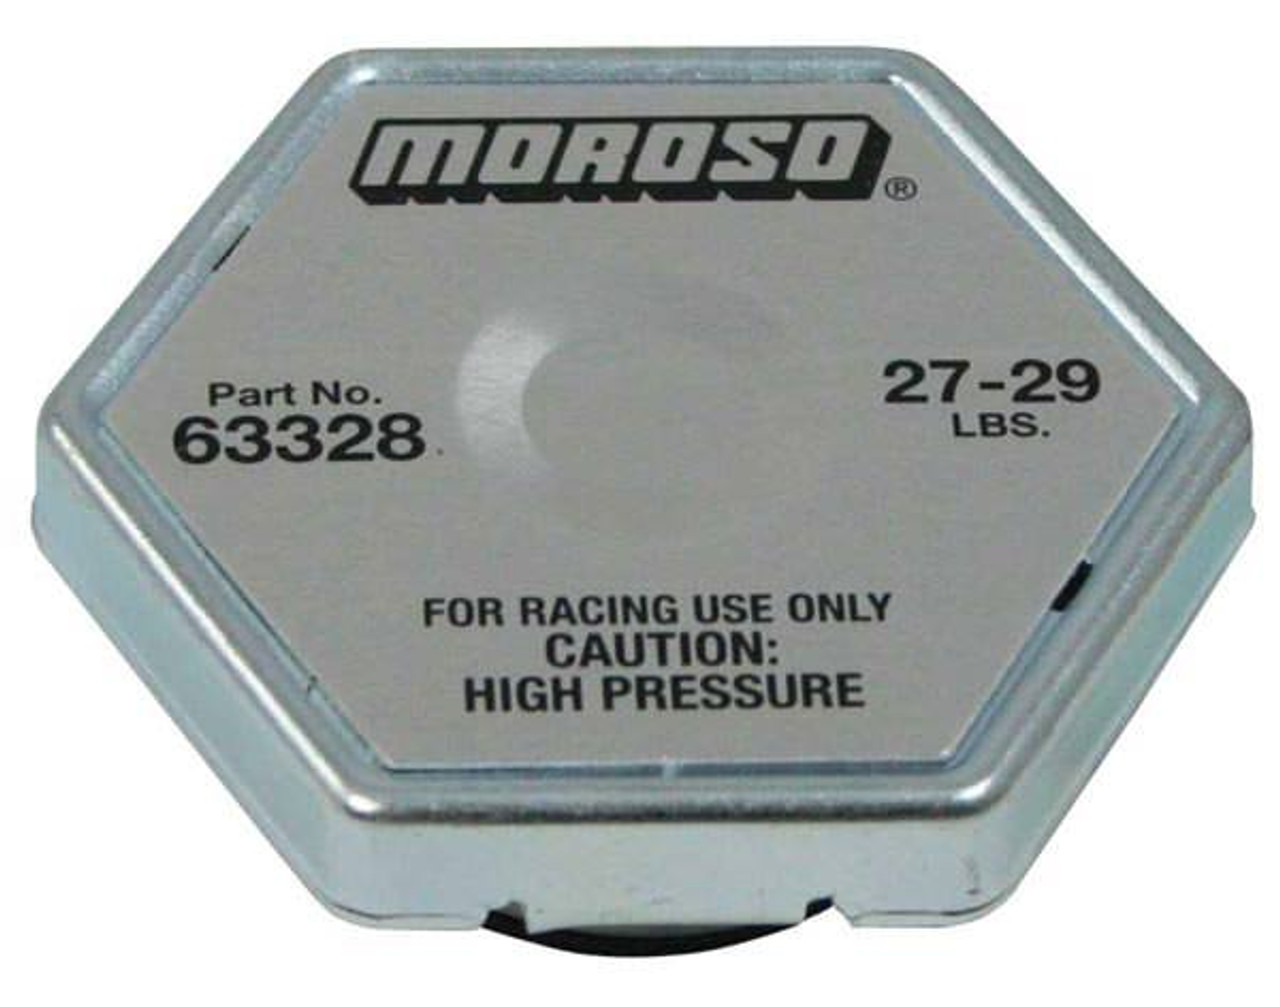 Moroso Racing Radiator Cap 27-29LBS.